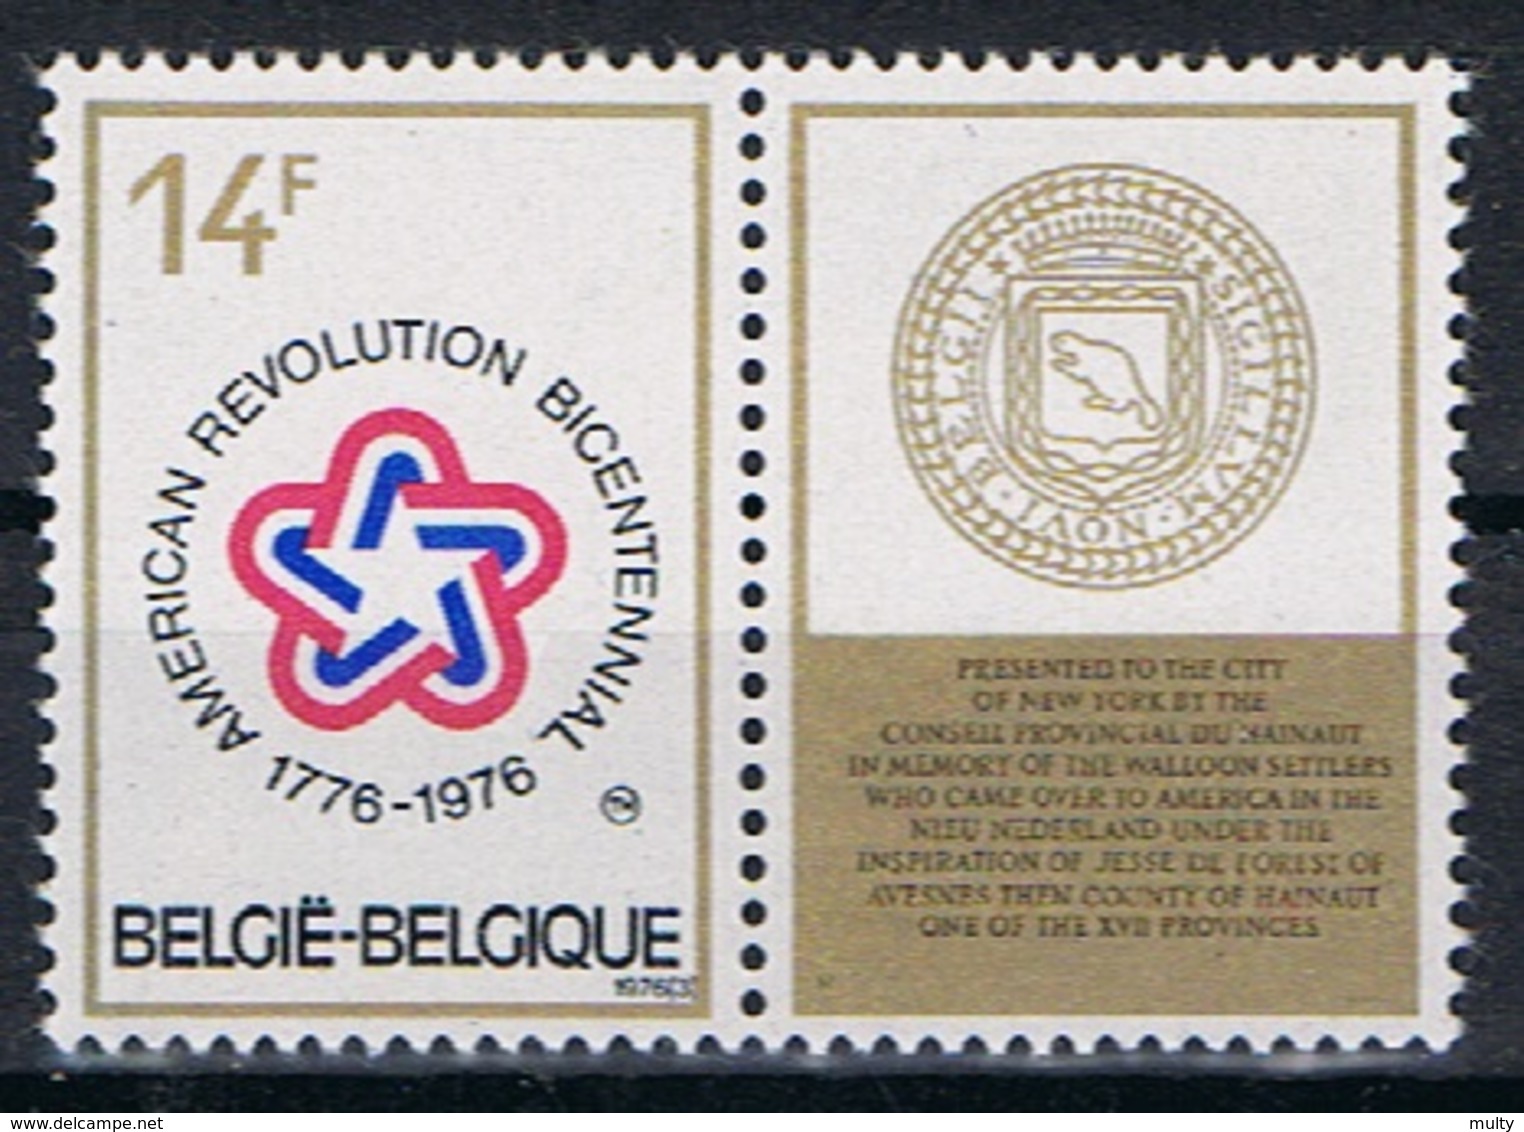 Belgie OCB 1797 (**) - Unused Stamps